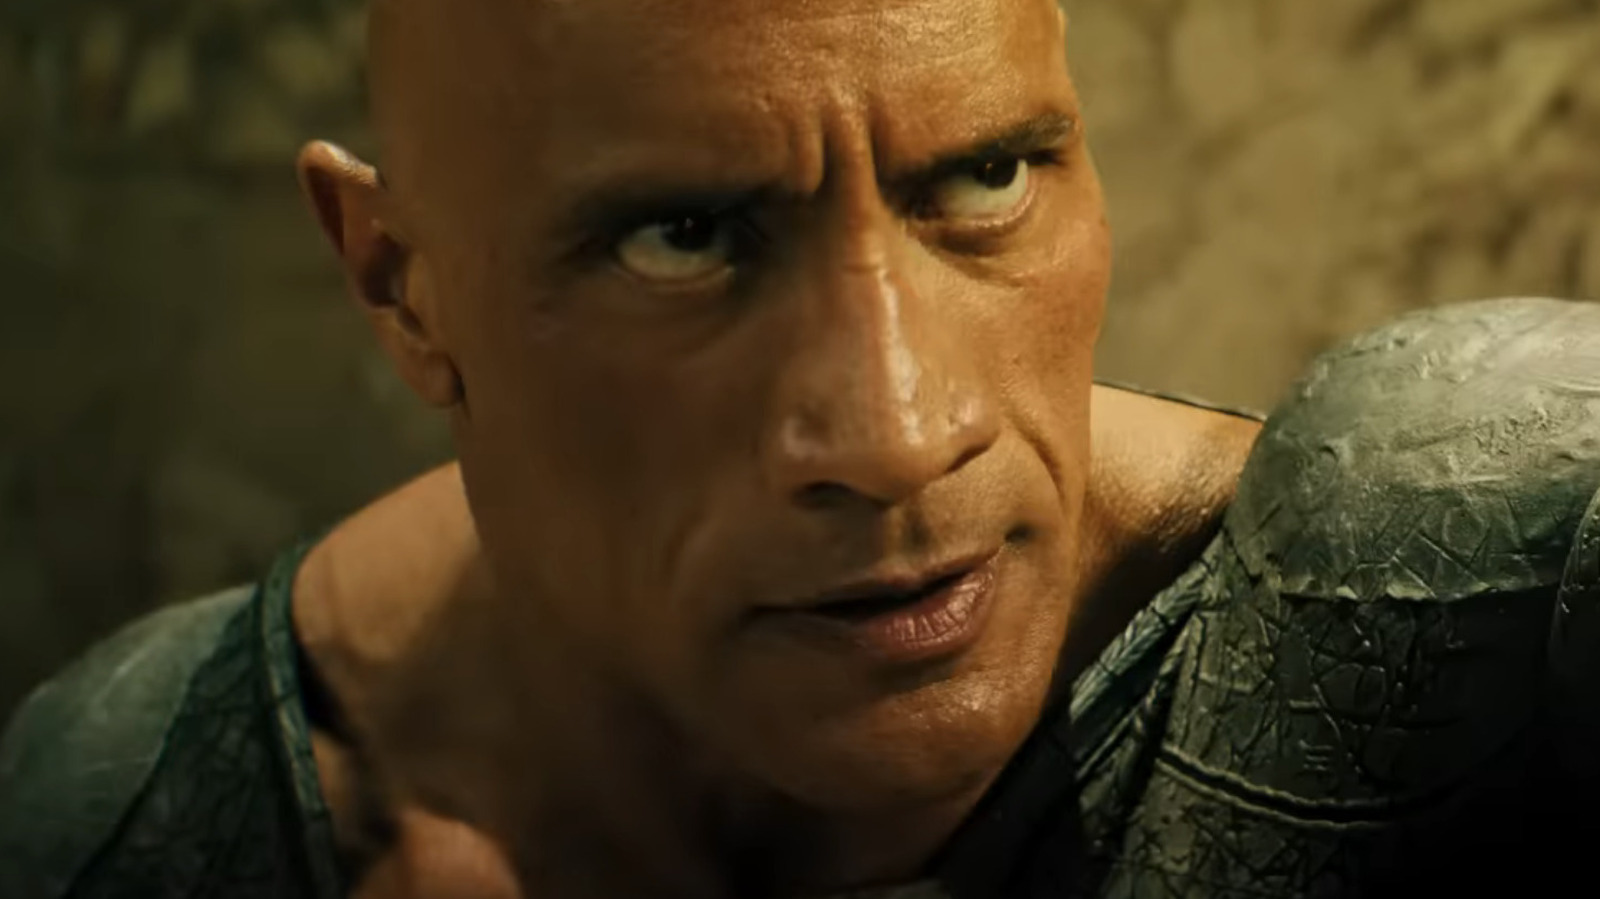 Black Adam Almost Has Same Rotten Tomatoes Score As Man Of Steel